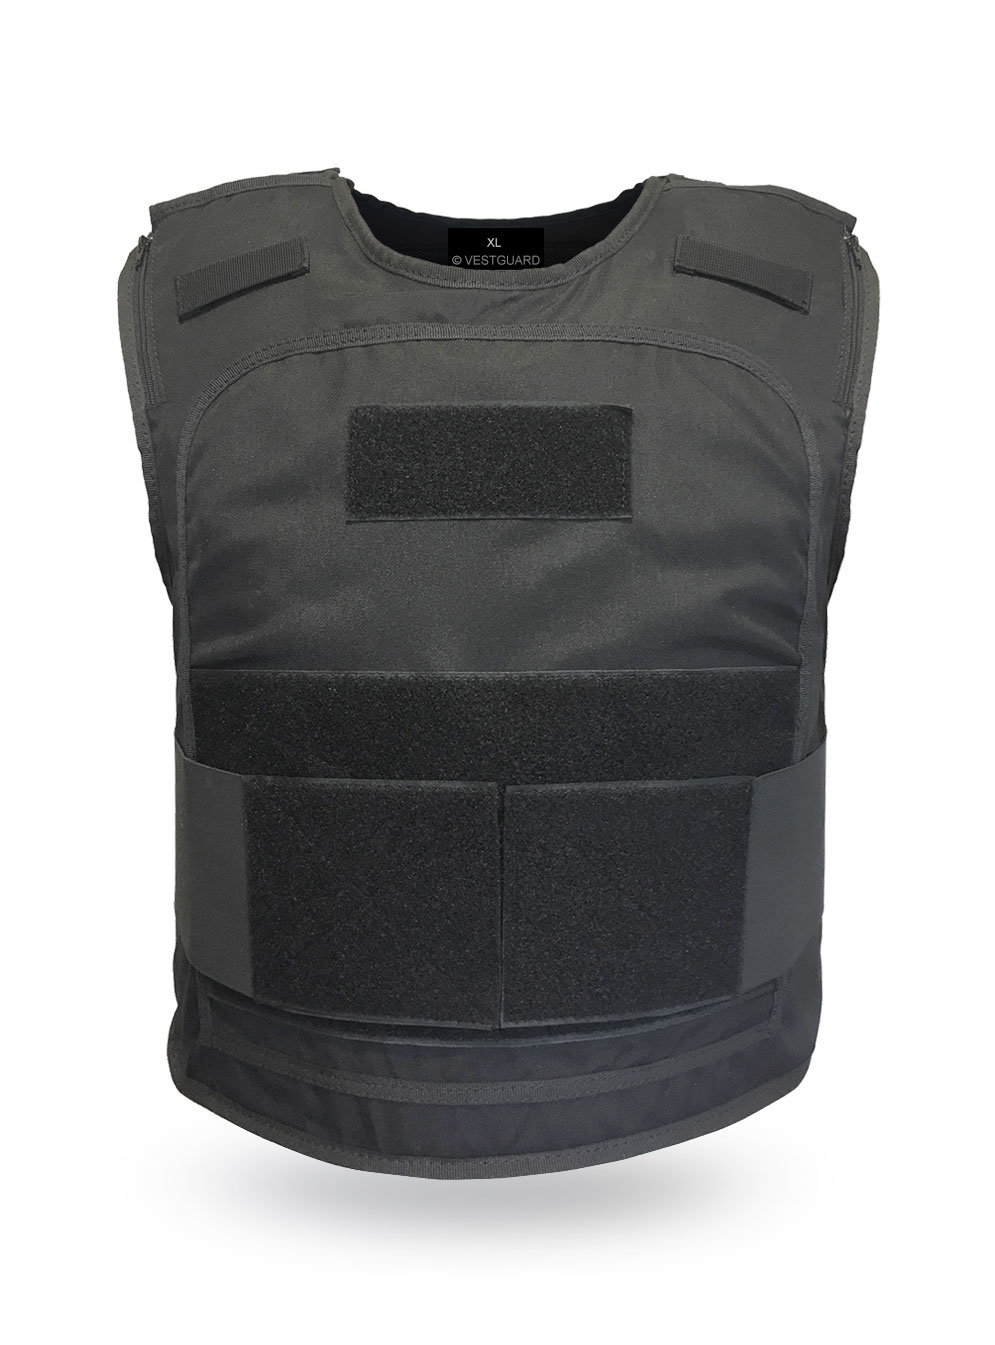 https://www.vestguard.com/user/VestGuard-Image--GS101-Global-Security-Body-Armour-front.jpg